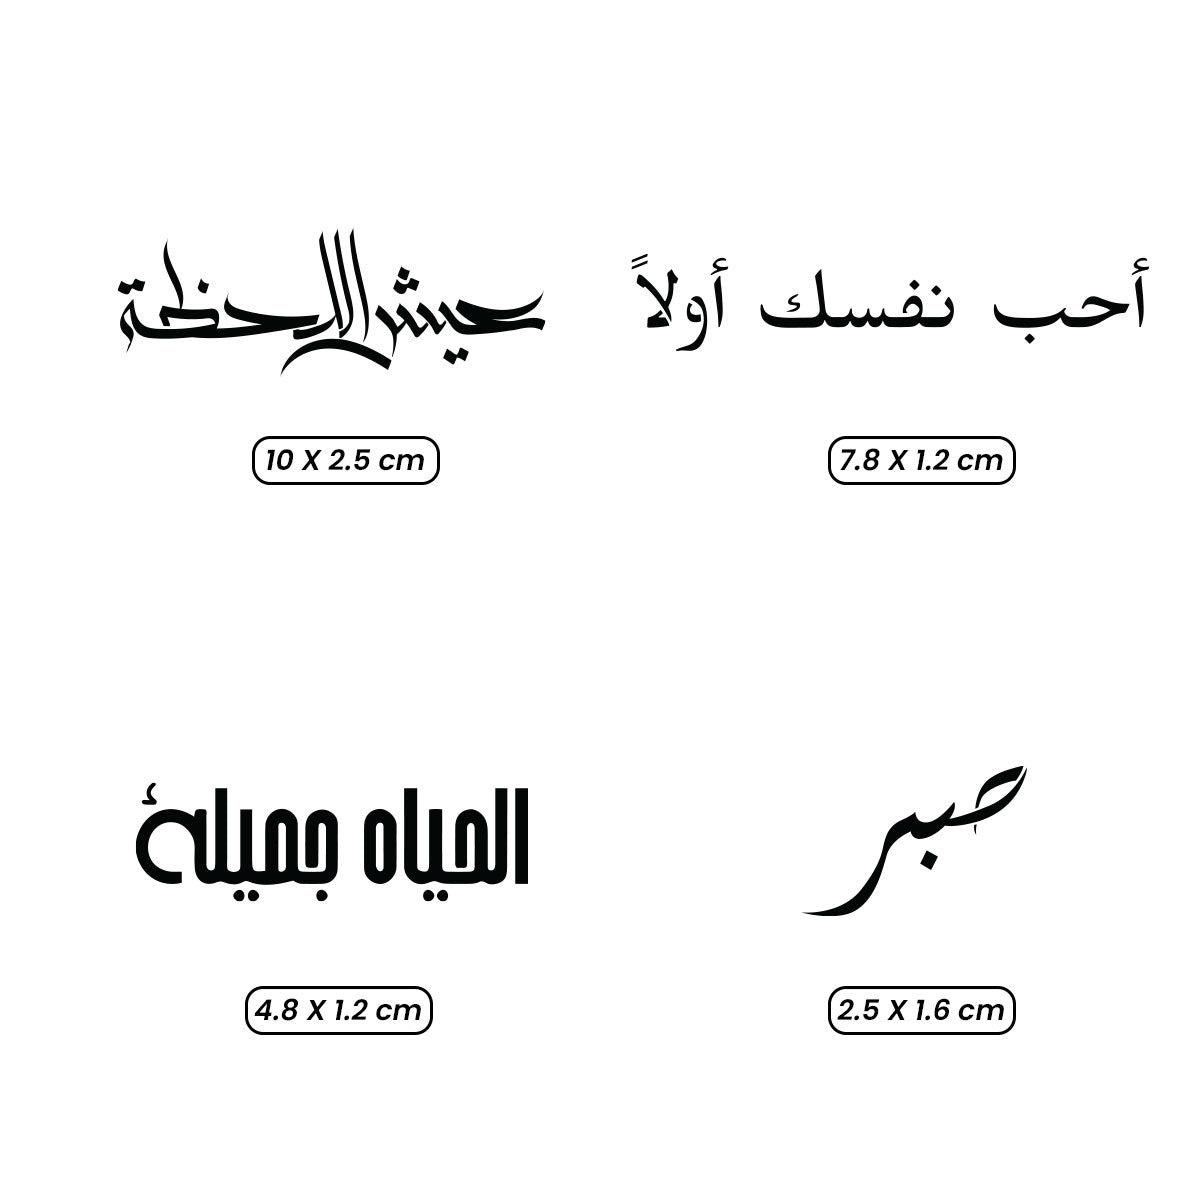 La Inka Tattoos - Arabic Collection